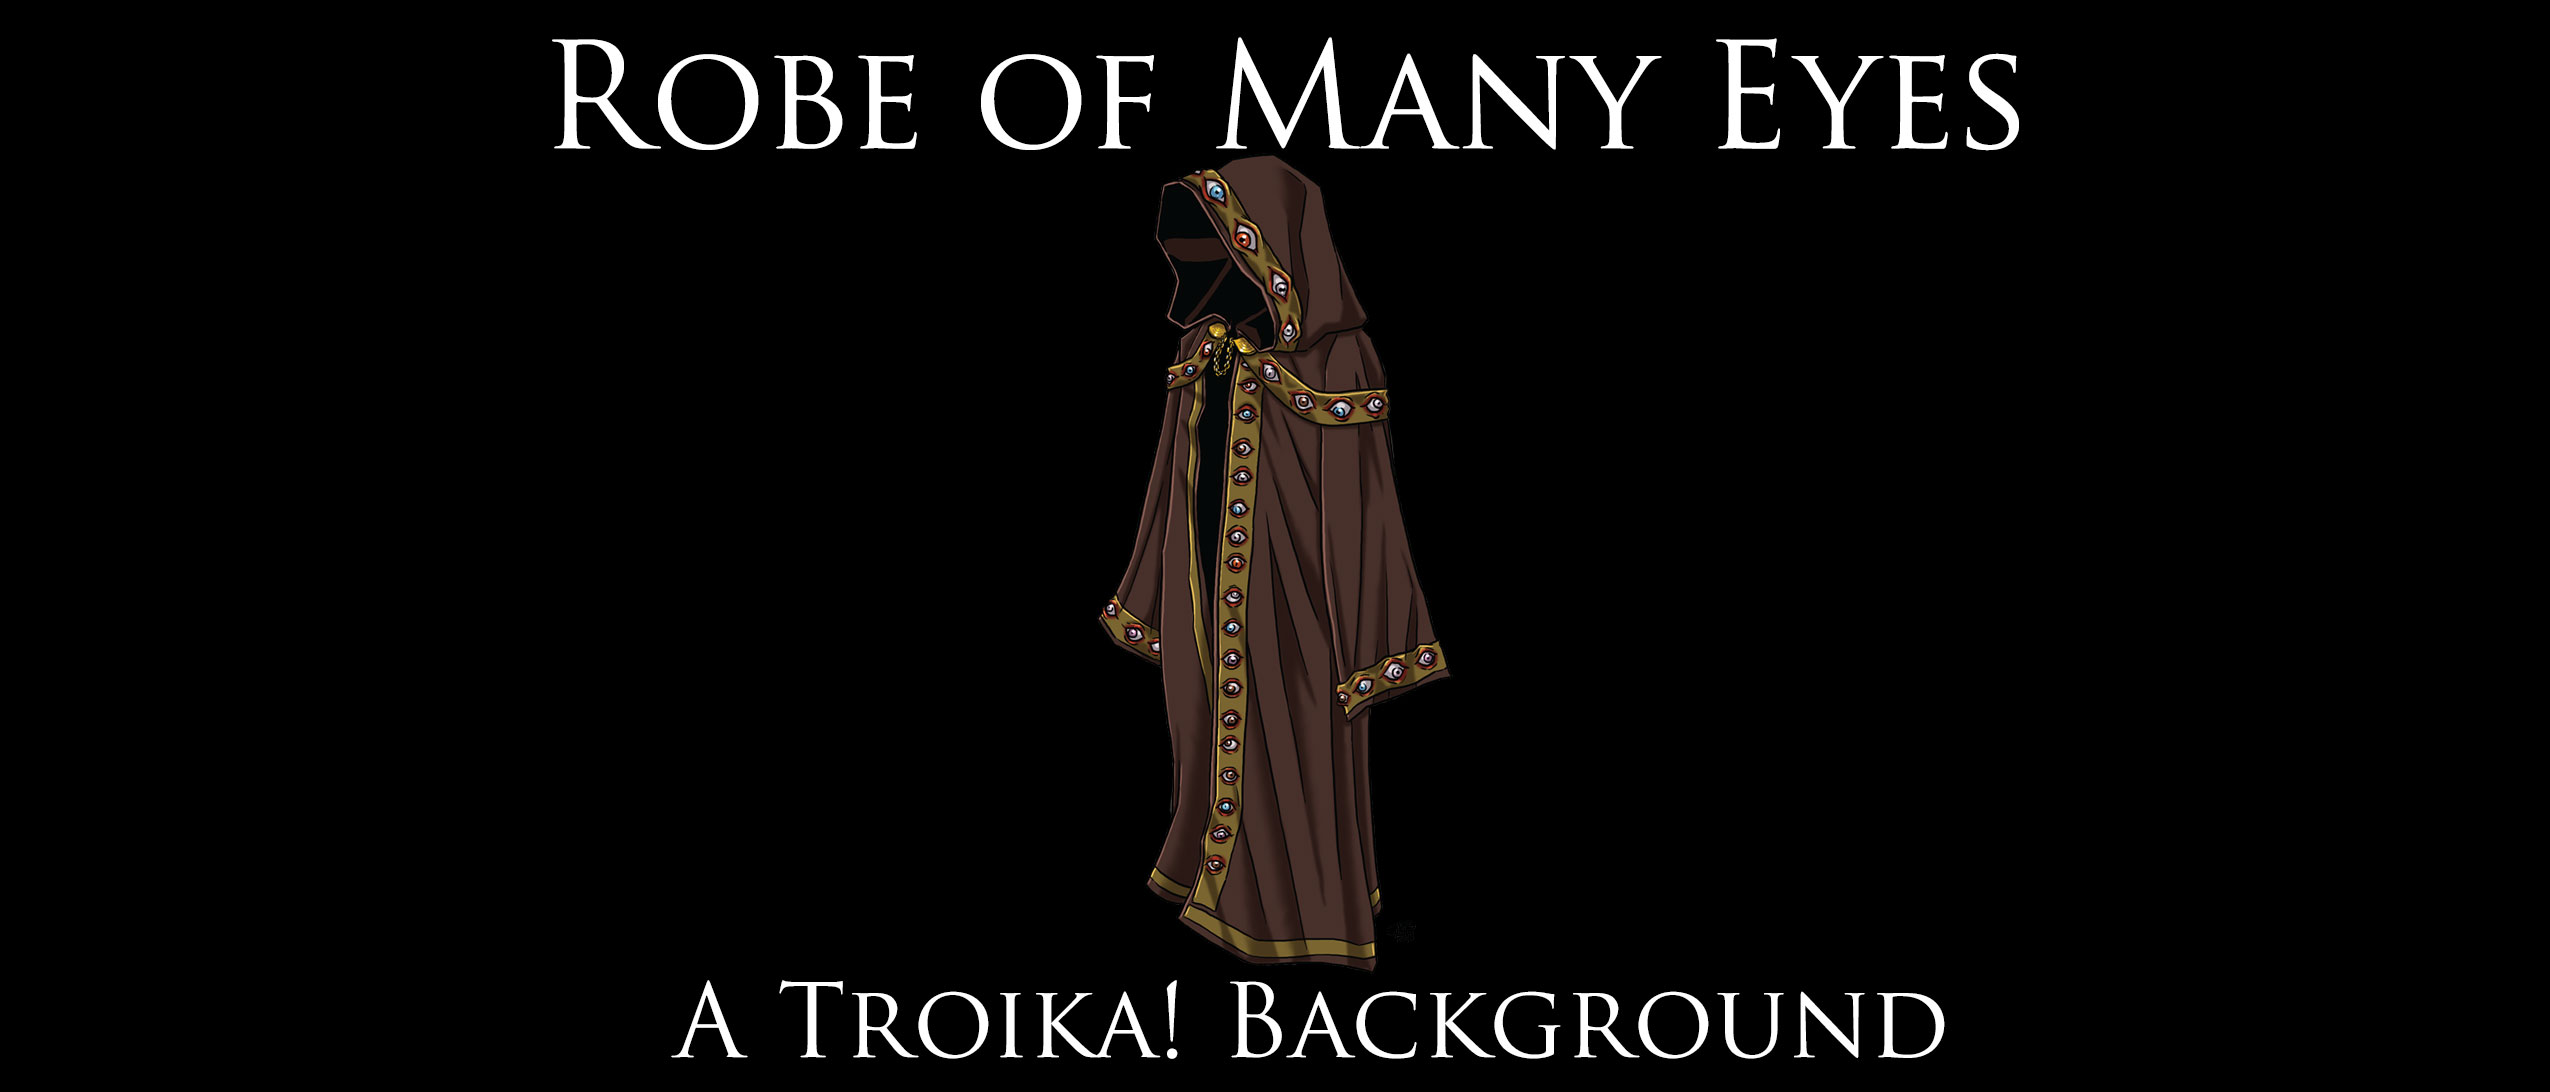 Robe of Many Eyes - A Troika! Background